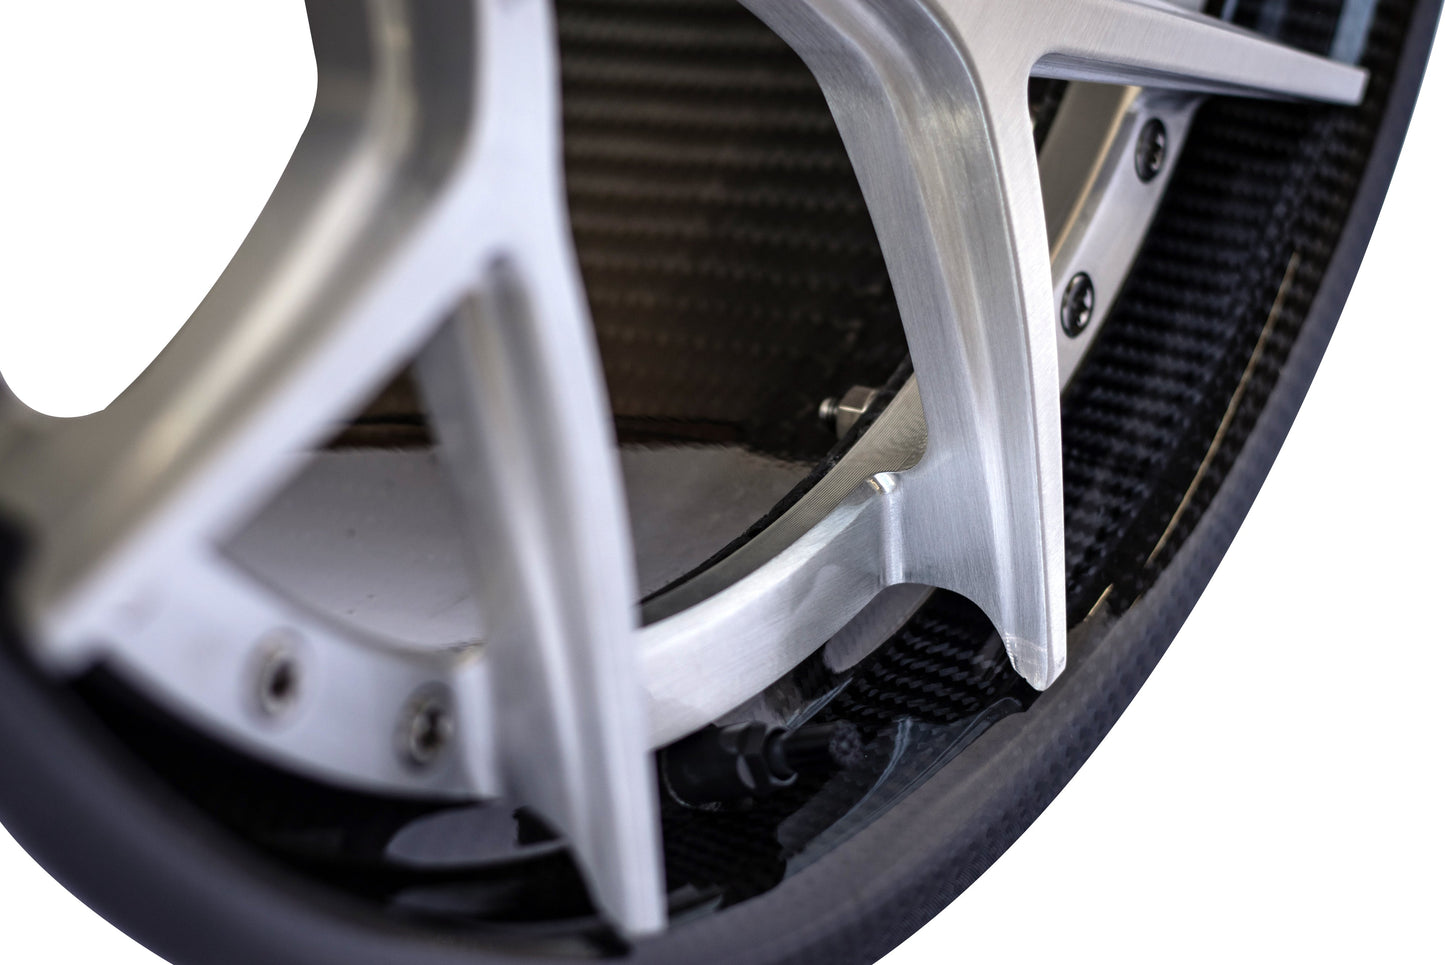 19x10" +25 MW05-C Carbon Fiber Wheels For Tesla Model 3/Y